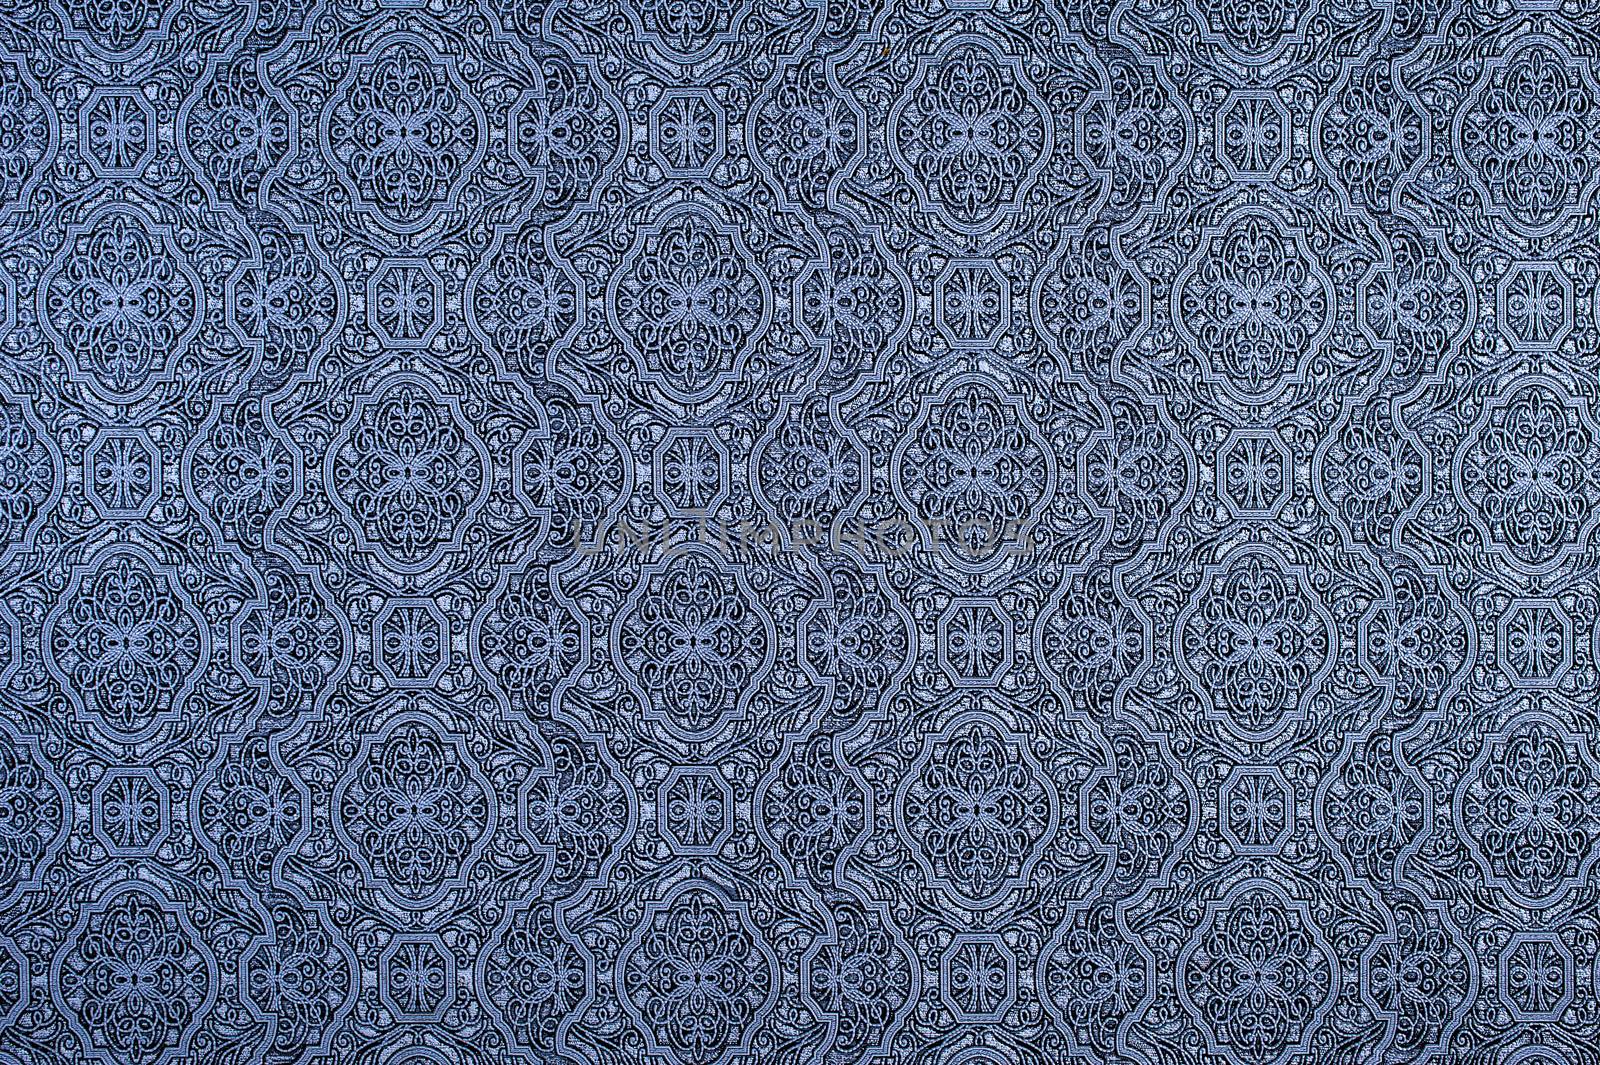 Seamless black and white damask wallpaper background pattern by chernobrovin